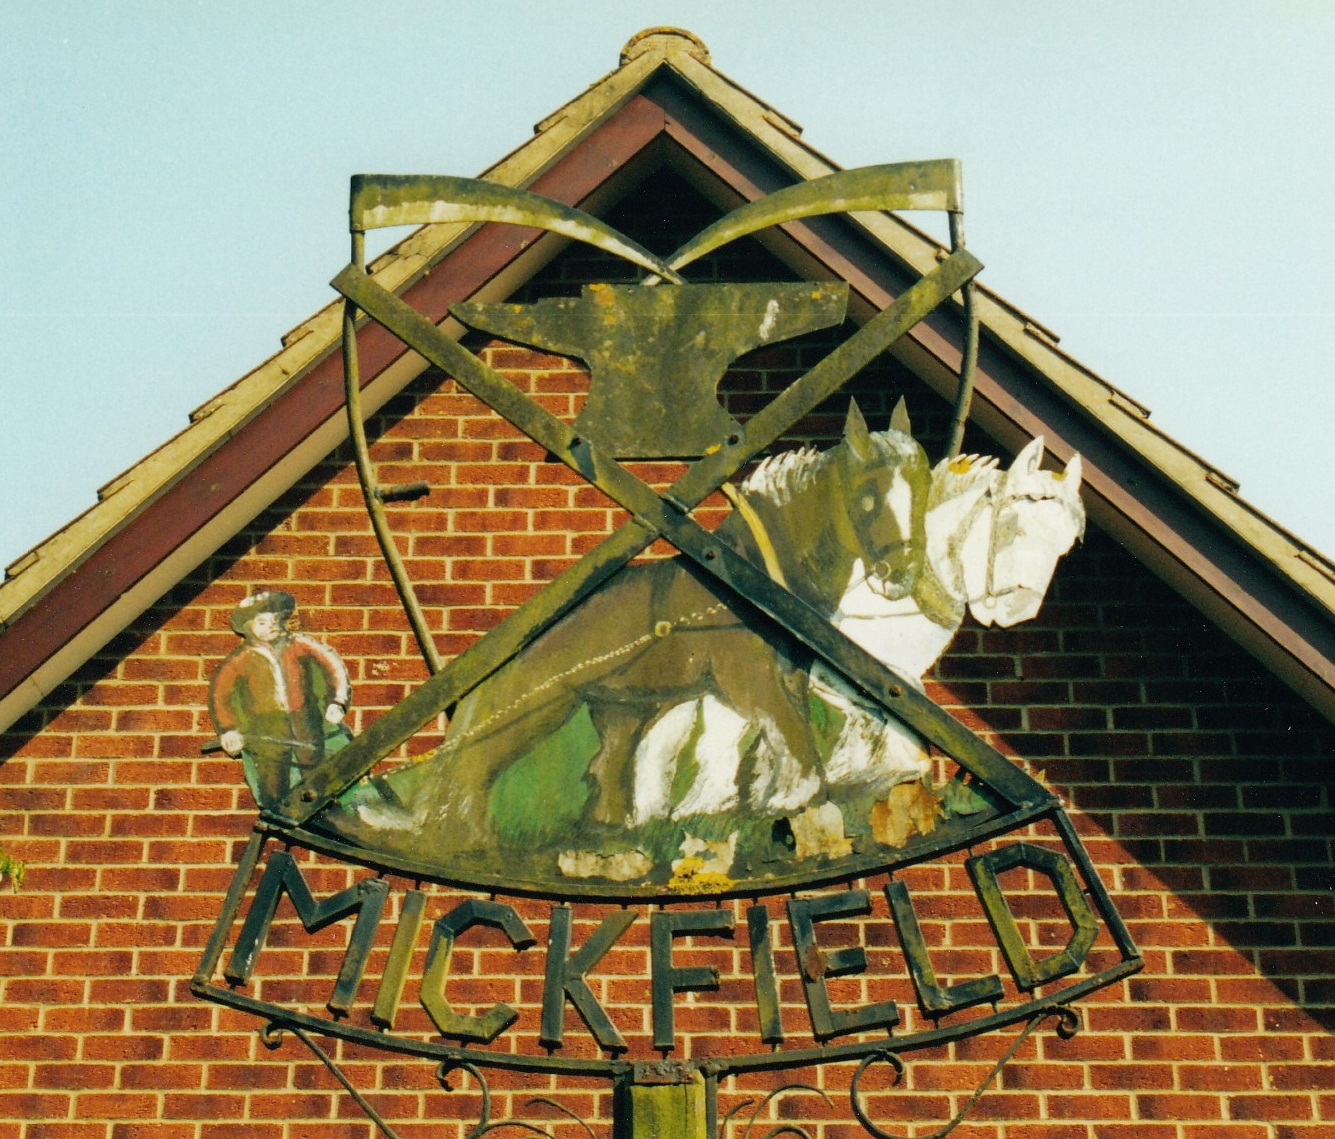 Original Mickfield Village sign